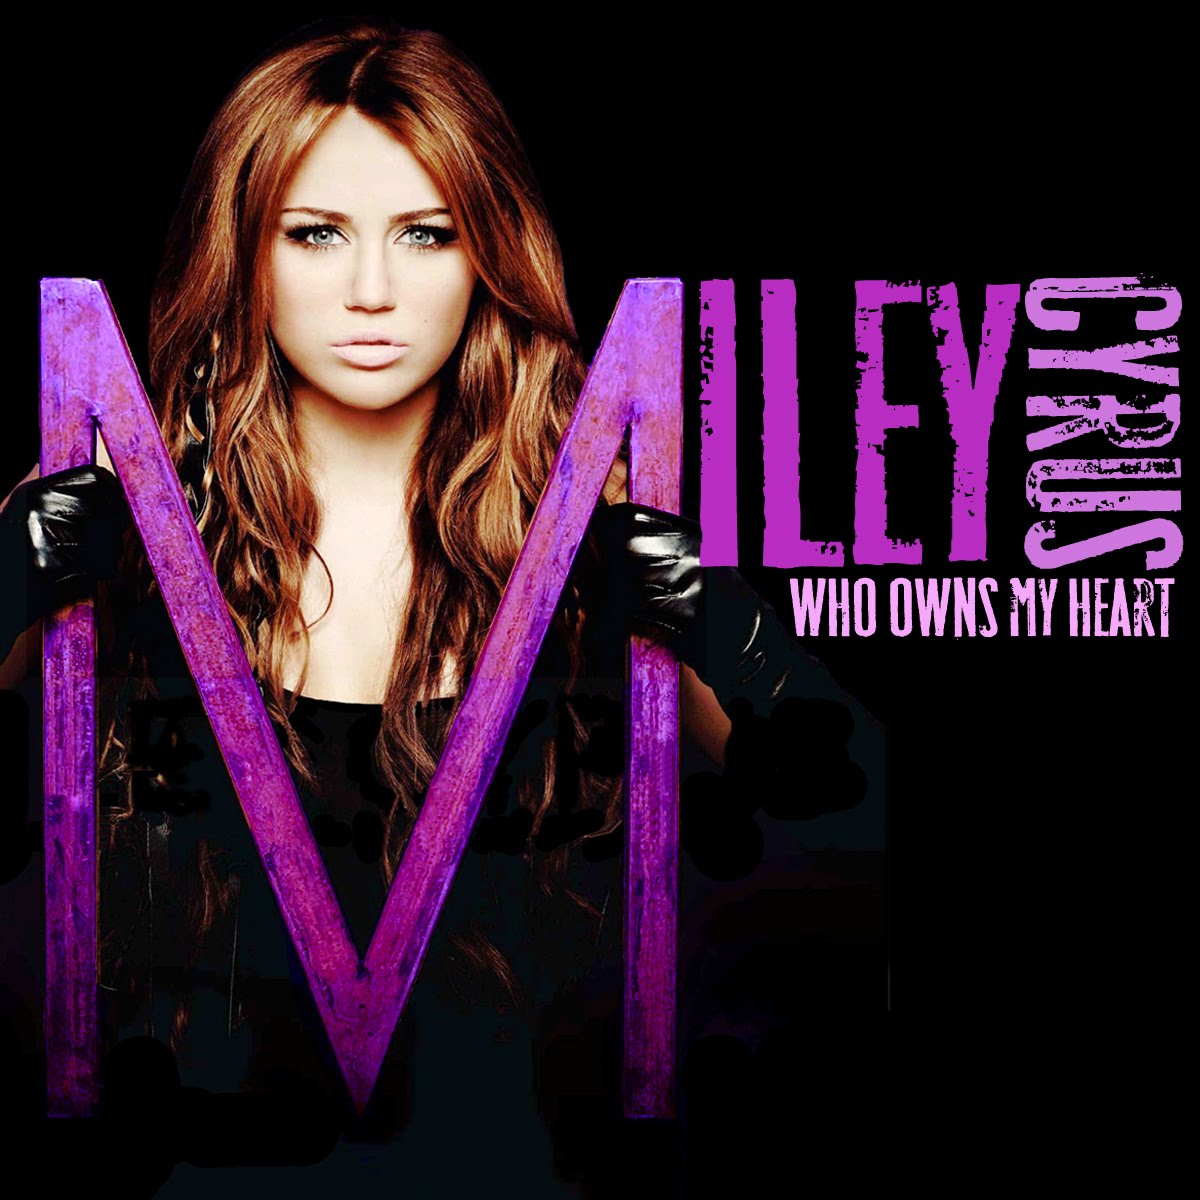 http://1.bp.blogspot.com/_fdfRpP2AbC4/TK-e-3rskiI/AAAAAAAAIBc/MgDQEhxnO0g/s1600/lyricsvideoclips_Miley_Cyrus-Who_Owns_My_Heart.jpg